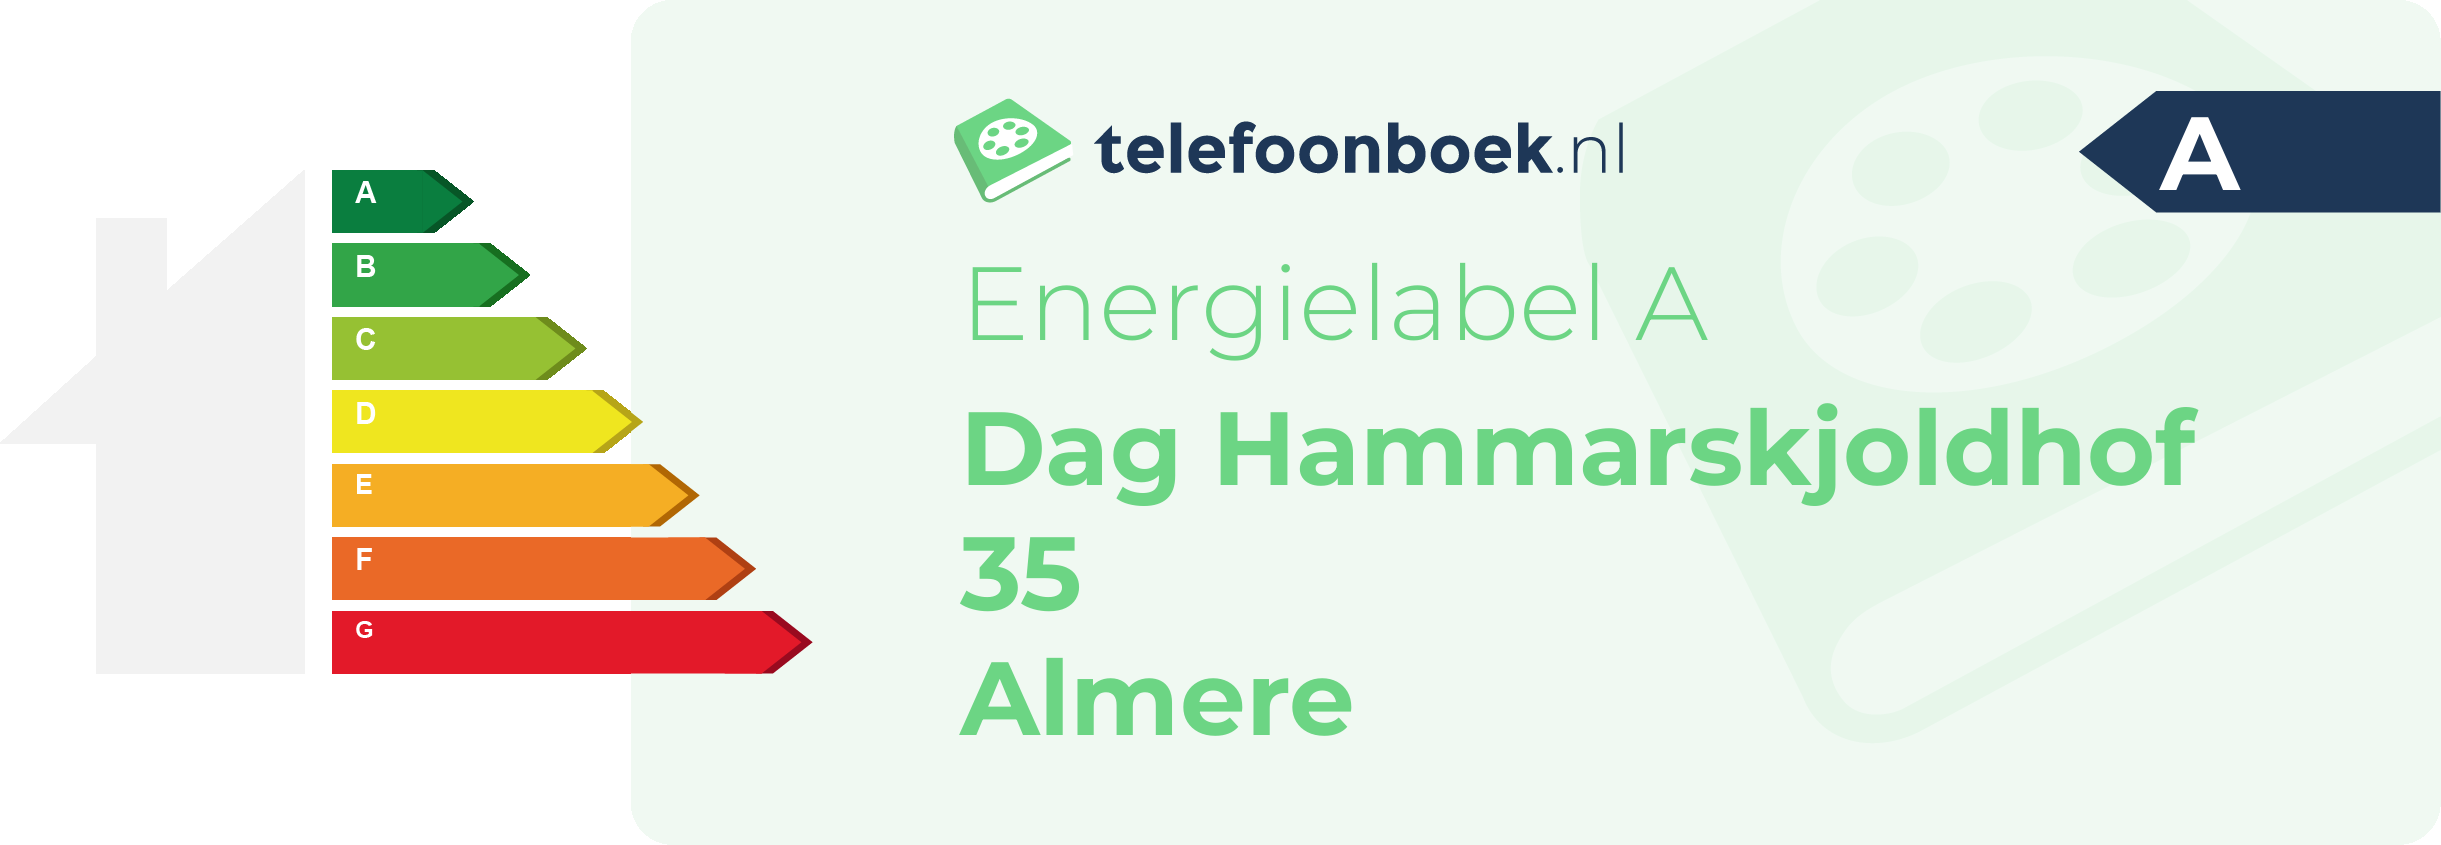 Energielabel Dag Hammarskjoldhof 35 Almere